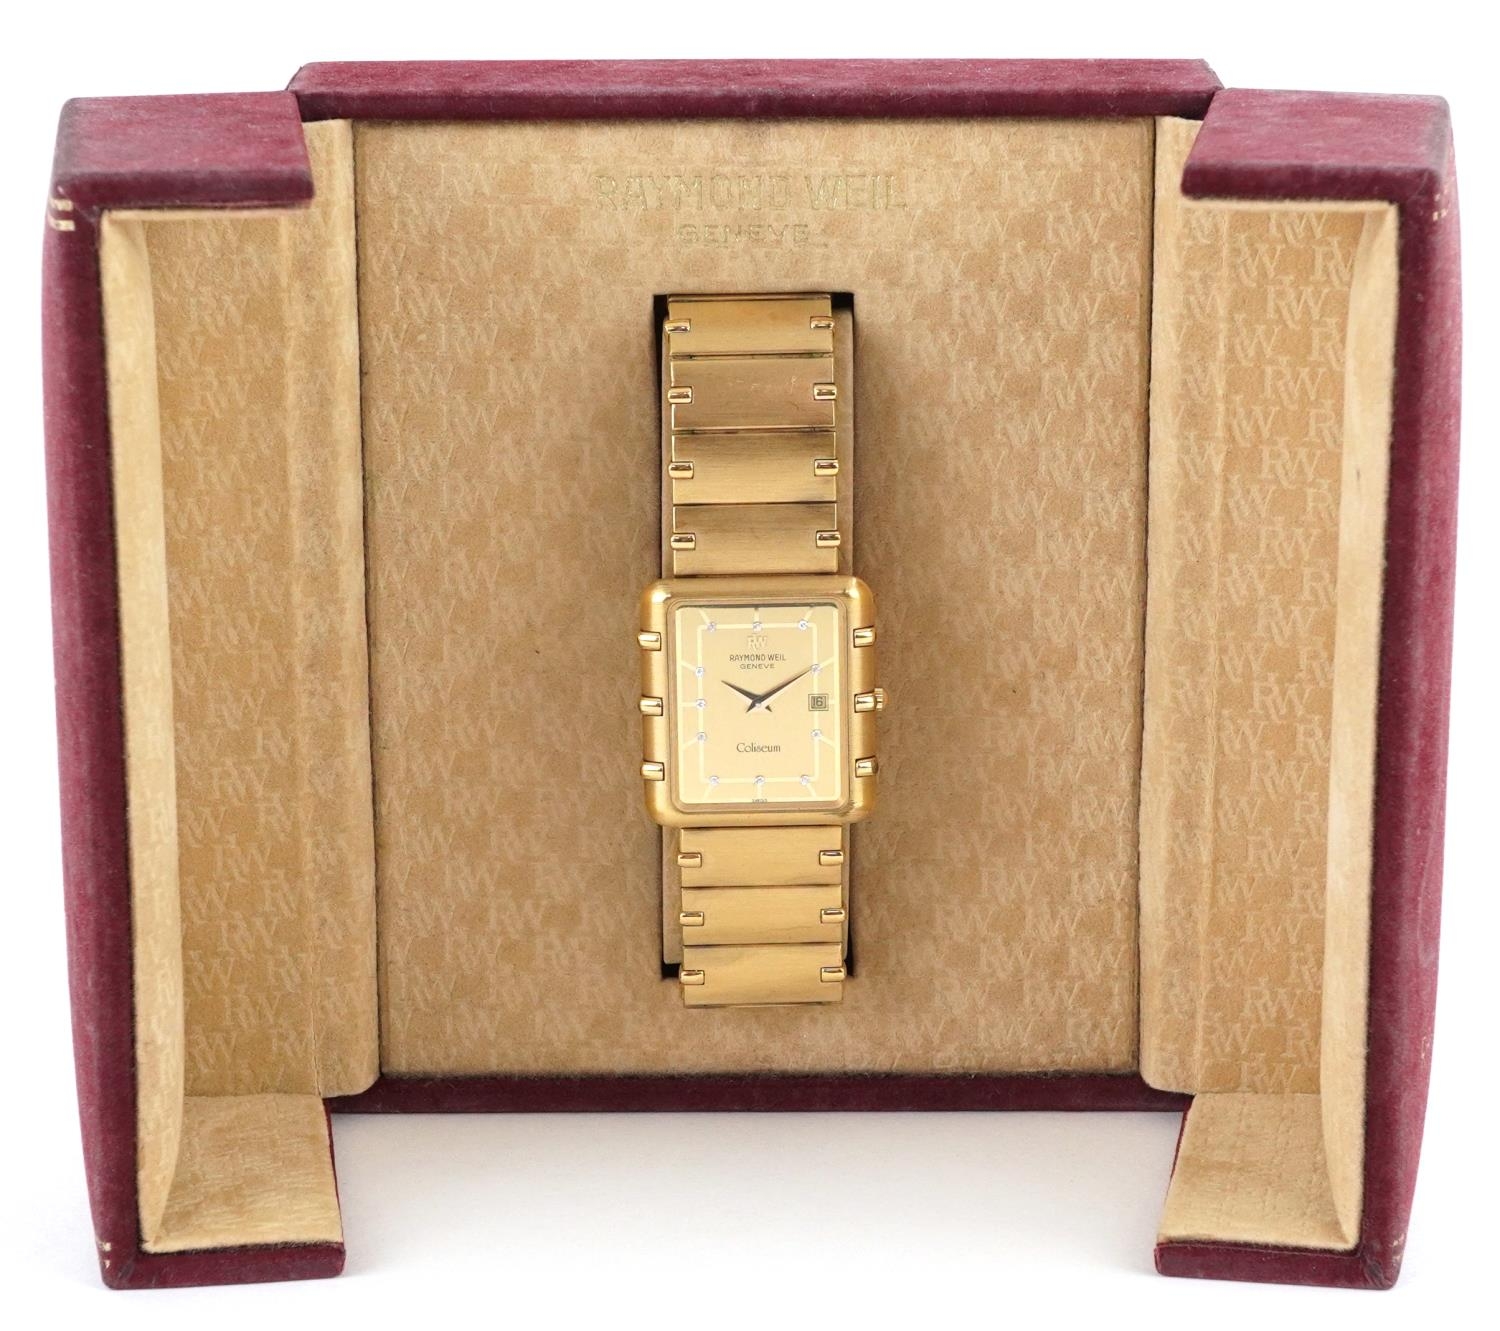 Raymond Weil, gentlemen's 18K gold plated Raymond Weil Colosseum quartz wristwatch with date - Image 6 of 7